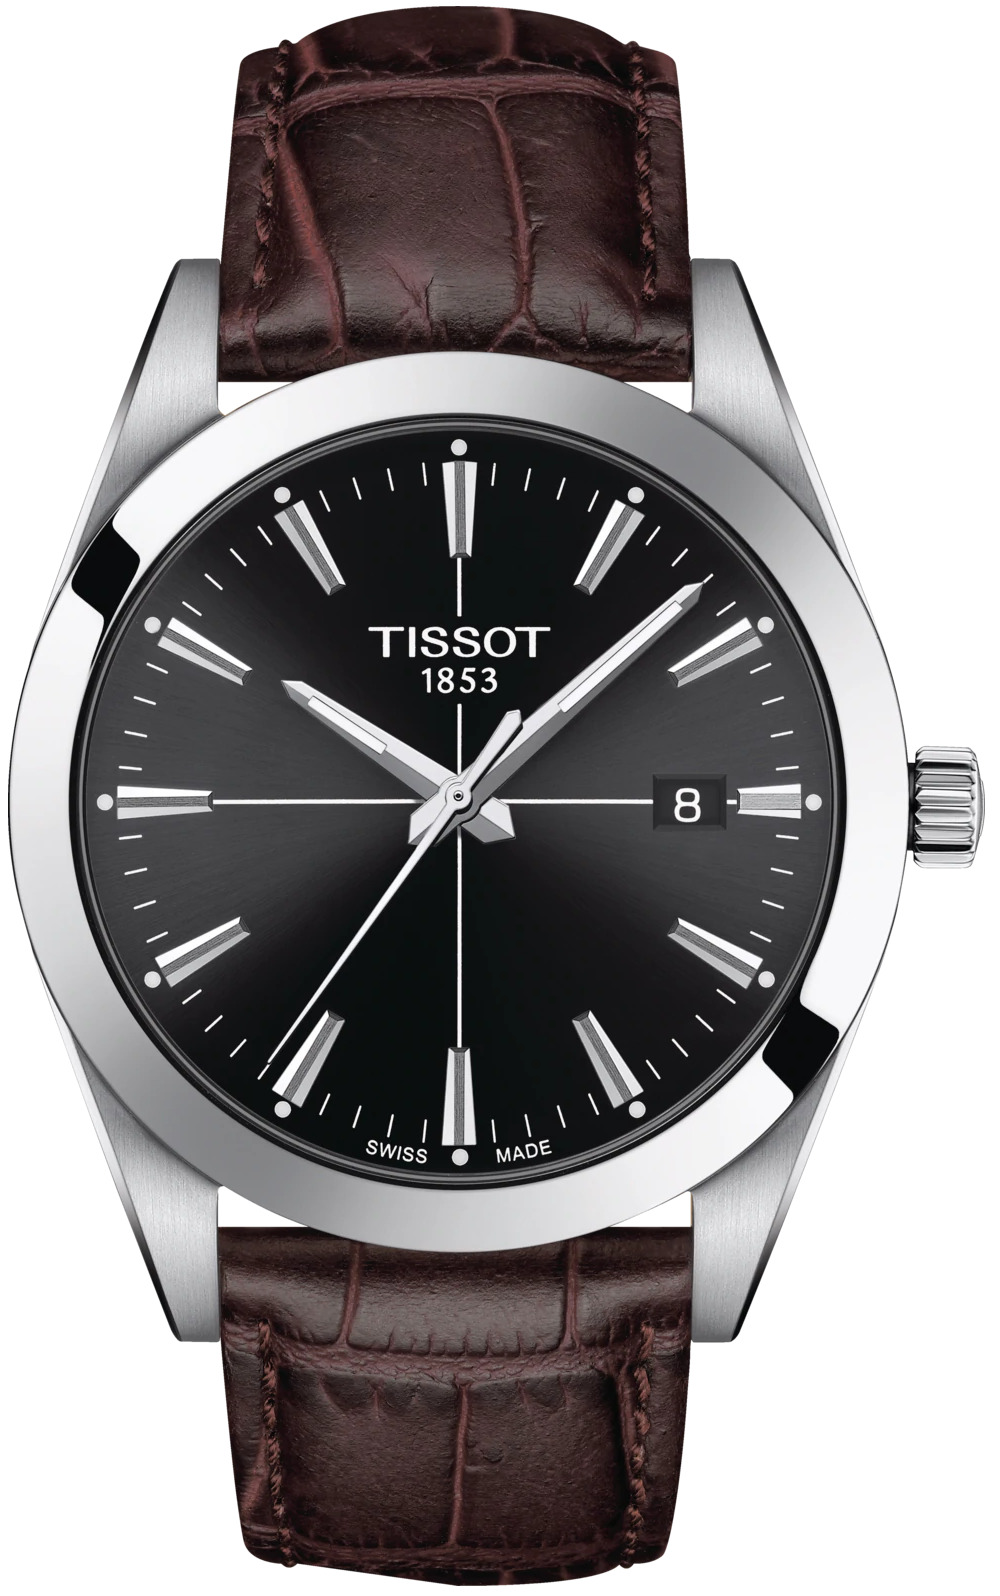 Đồng hồ nam Tissot Gentleman T127.410.16.051.01